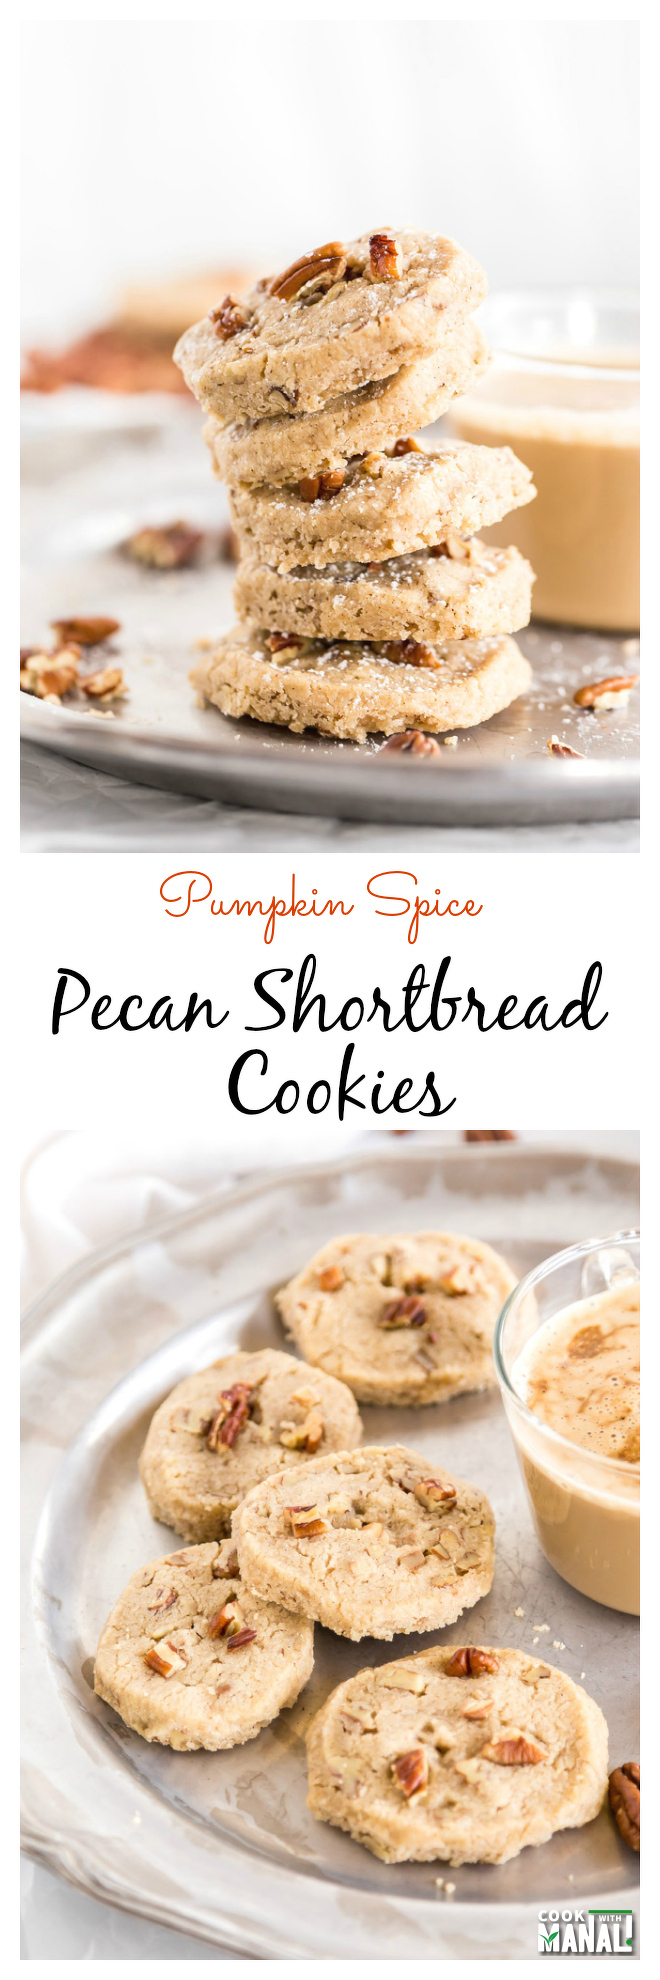 Pumpkin Spice Pecan Shortbread Cookies Collage